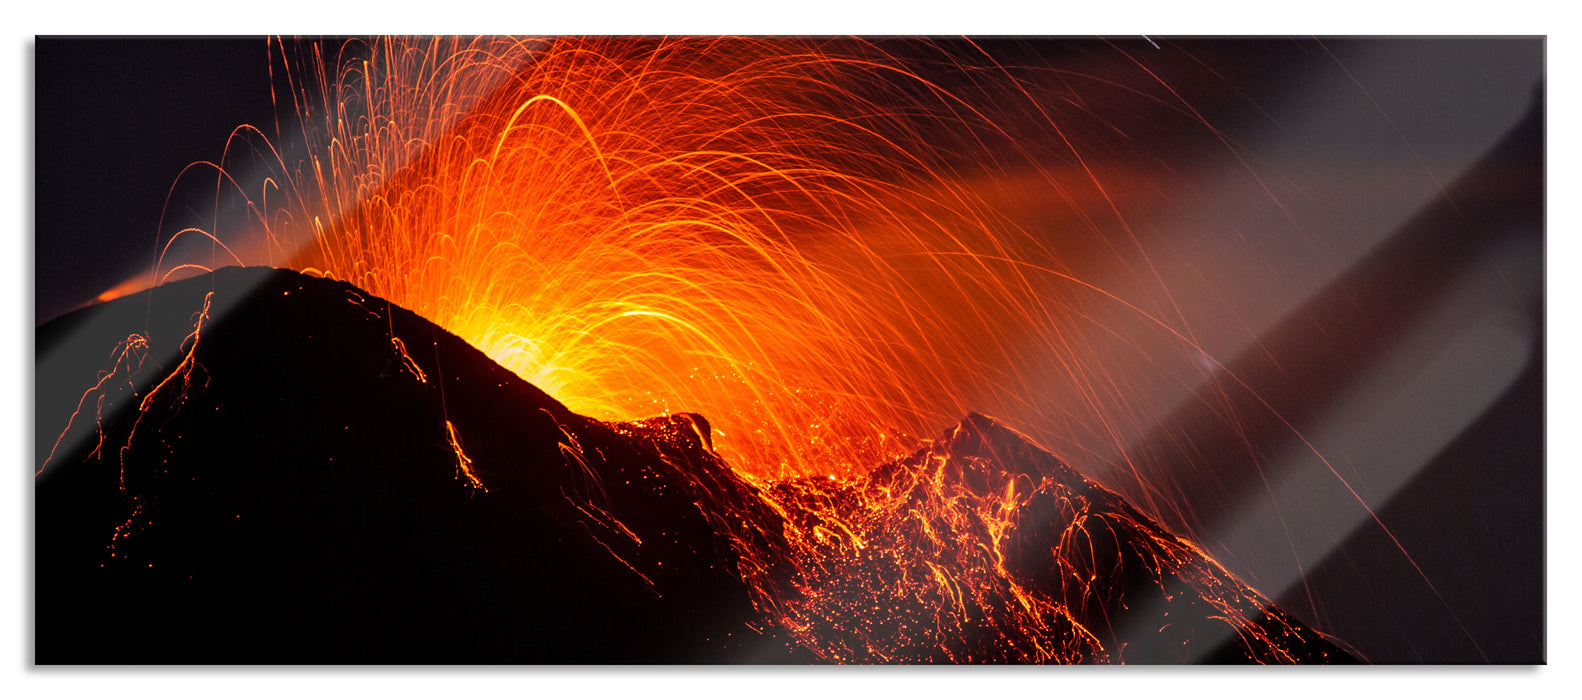 Bedrohlicher Vulkanausbruch, Glasbild Panorama